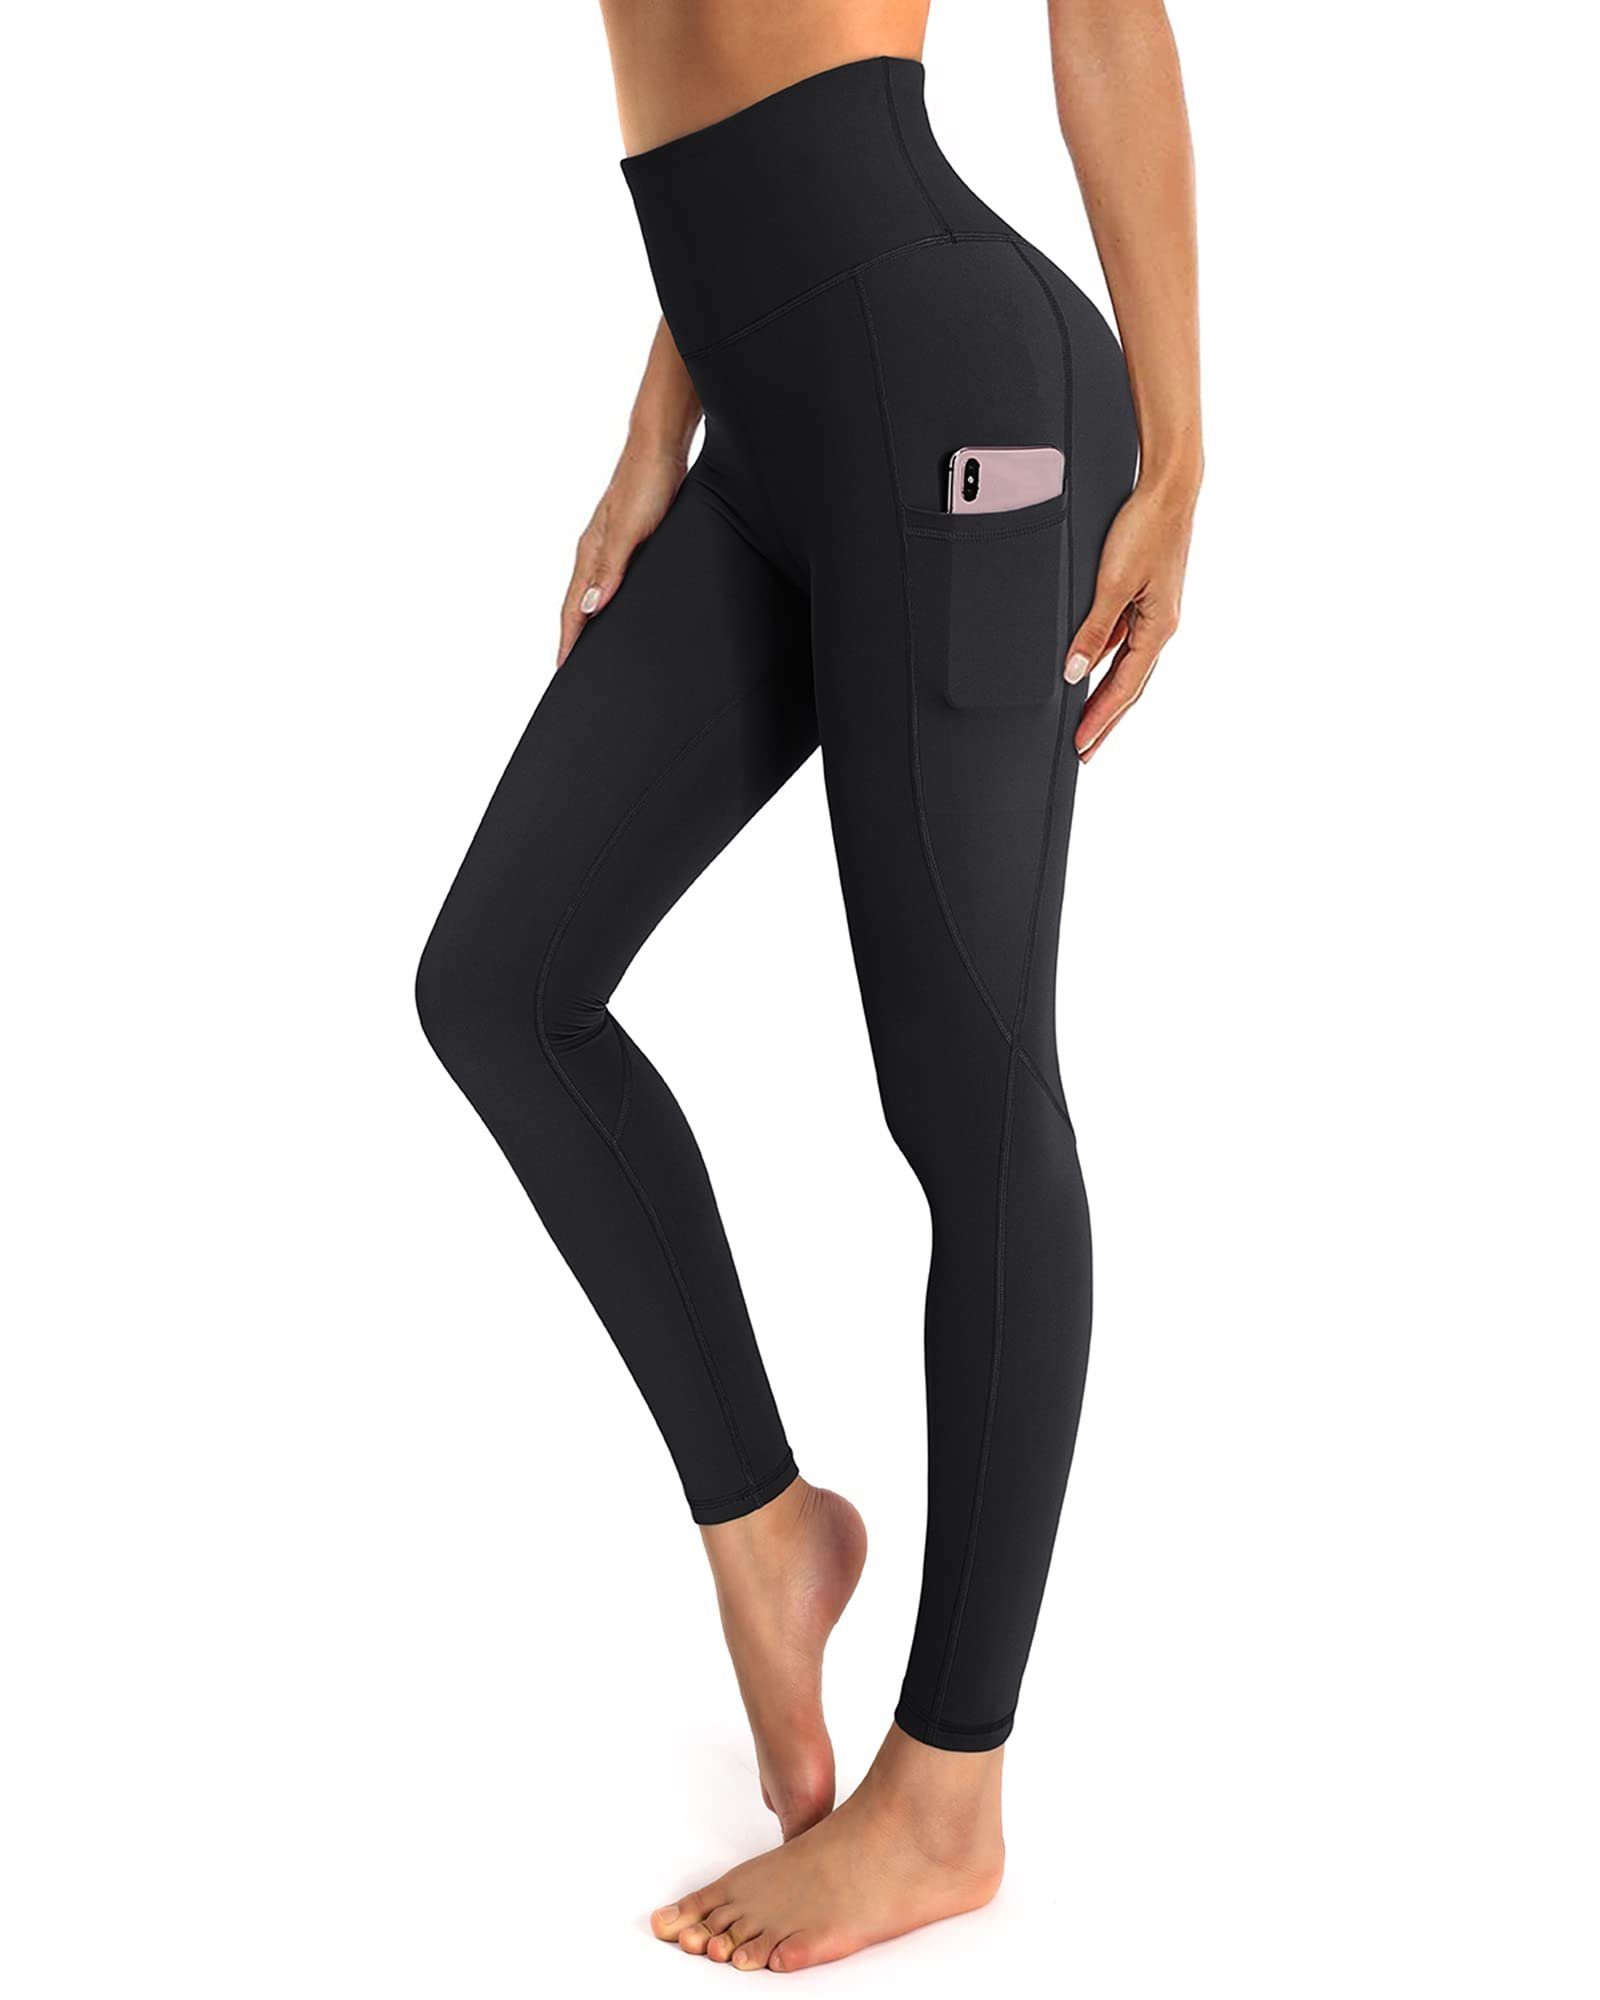 Taschen, Unisex Yogahose G4Free Damen-Yogahose mit Fitness-Laufleggings